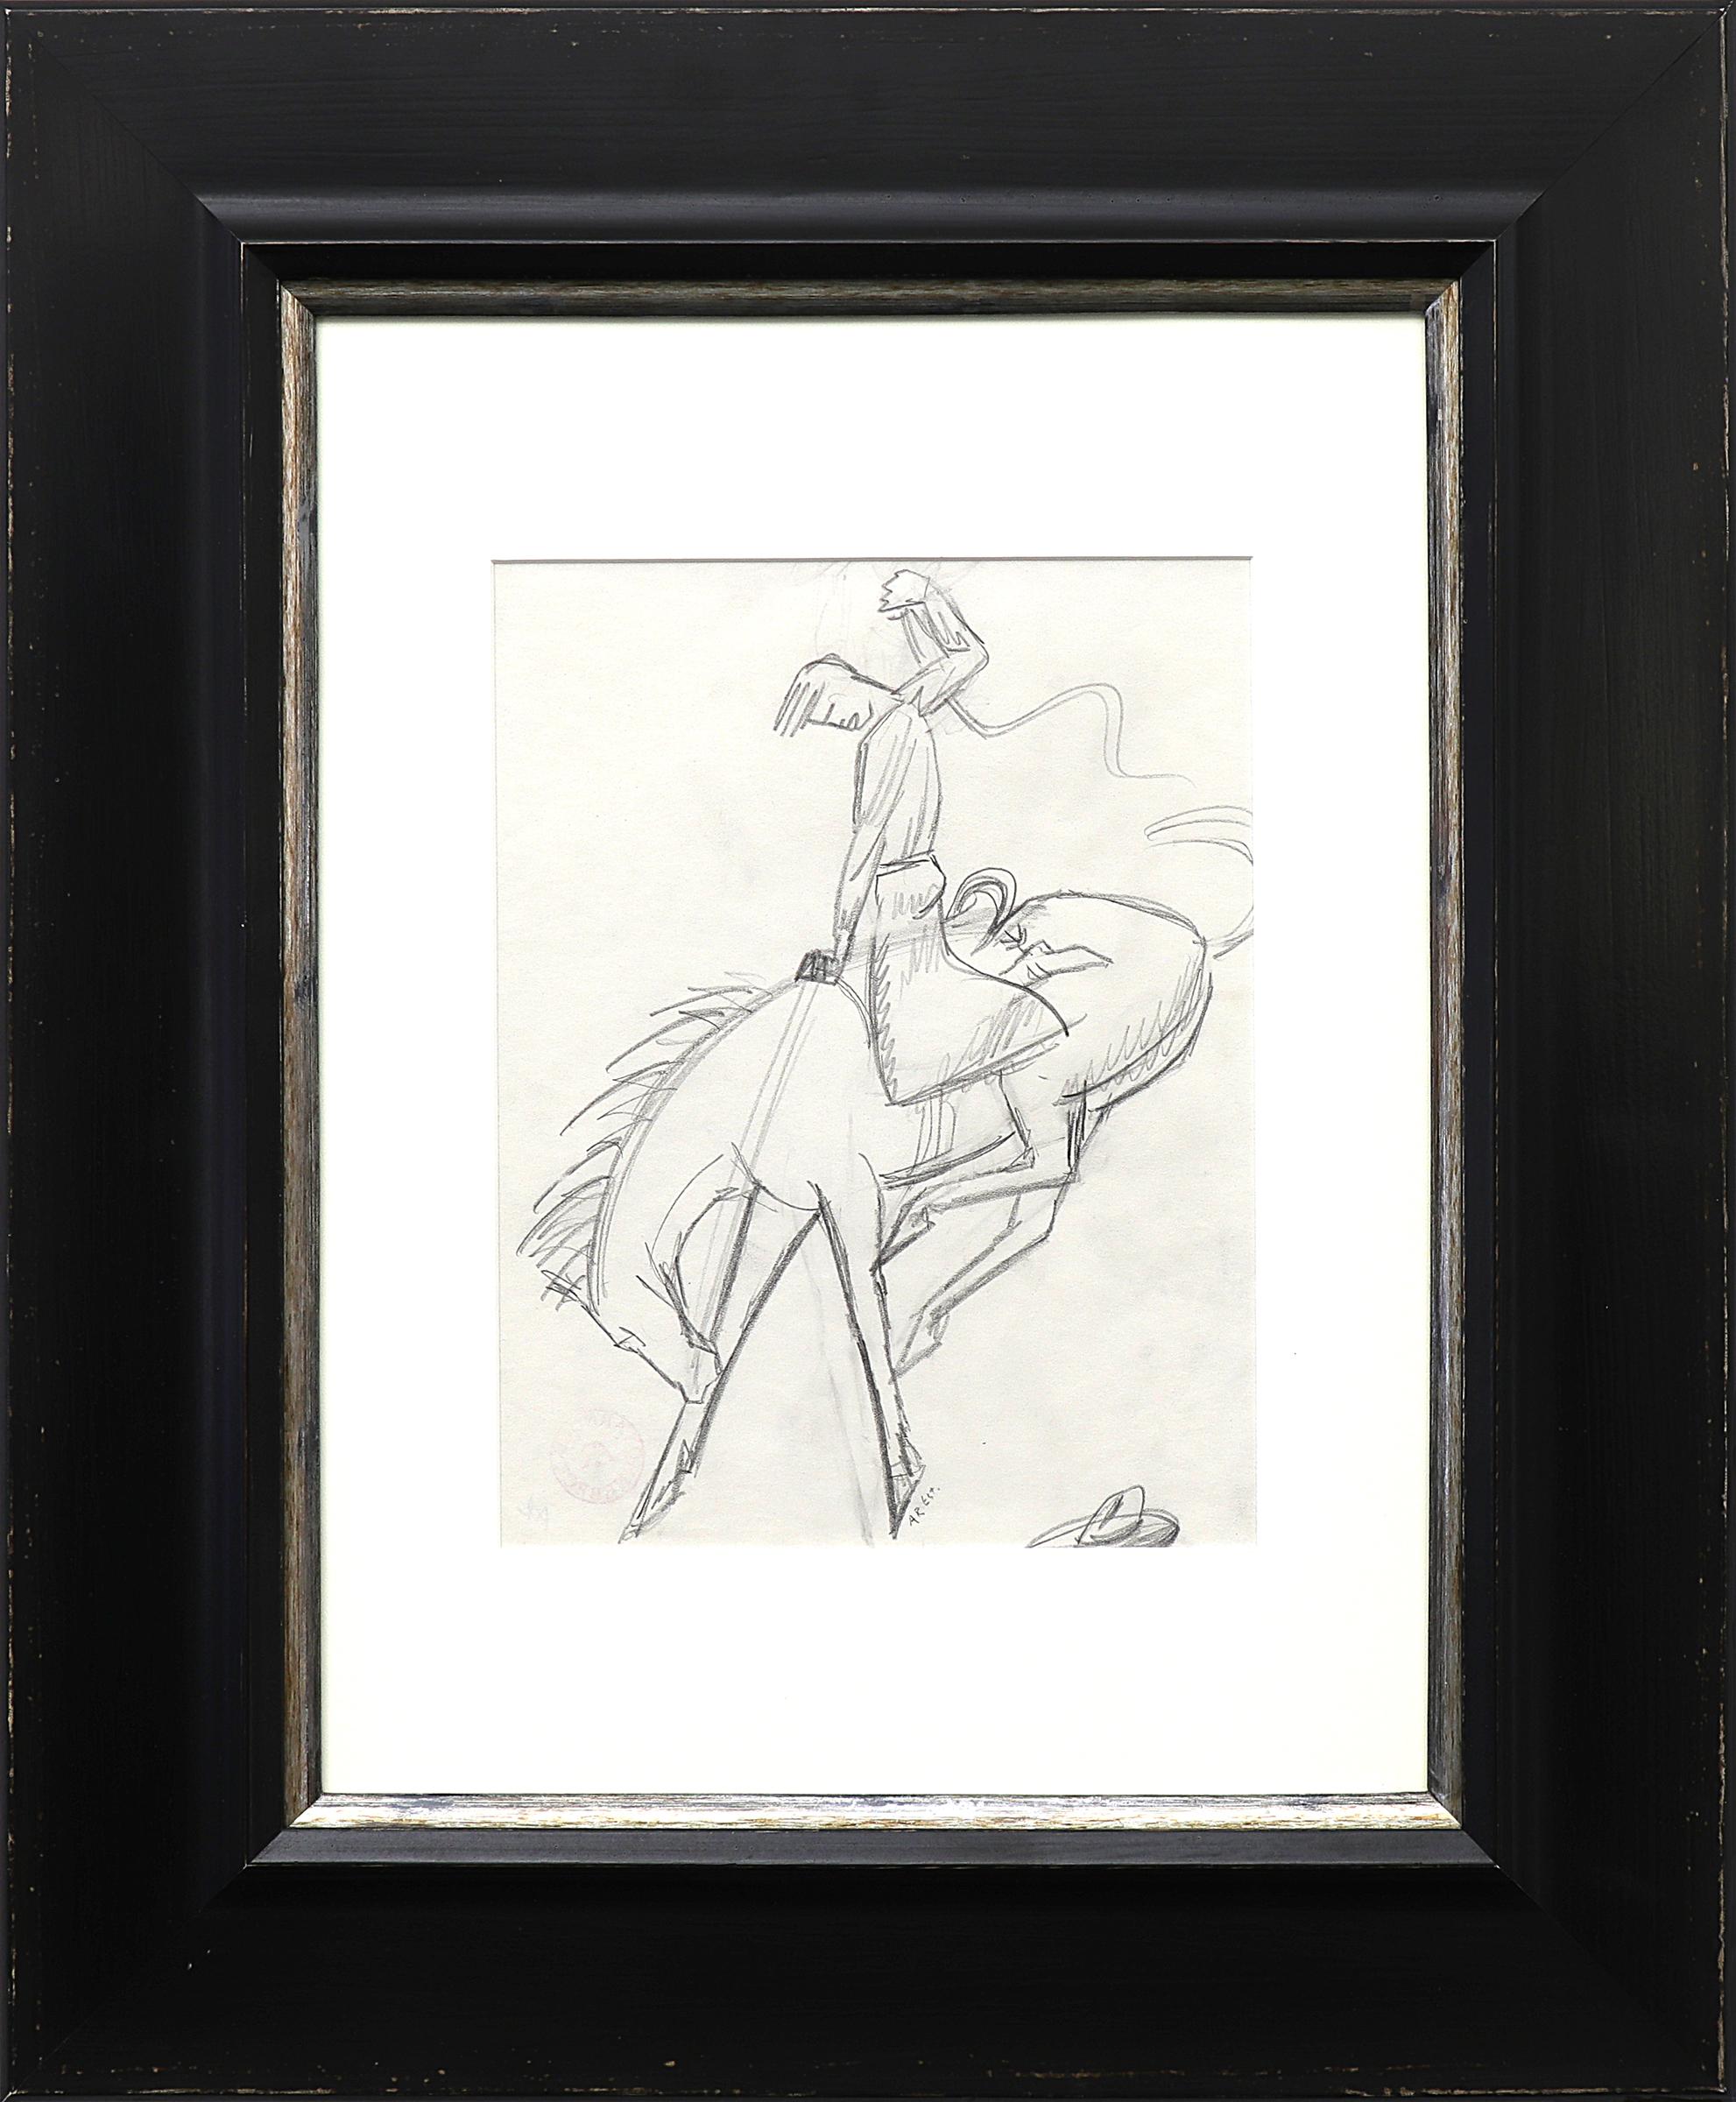 Arnold Ronnebeck Animal Art - Bucking Bronco, Original Sketch of Horse and Cowboy, Modernist Framed Drawing